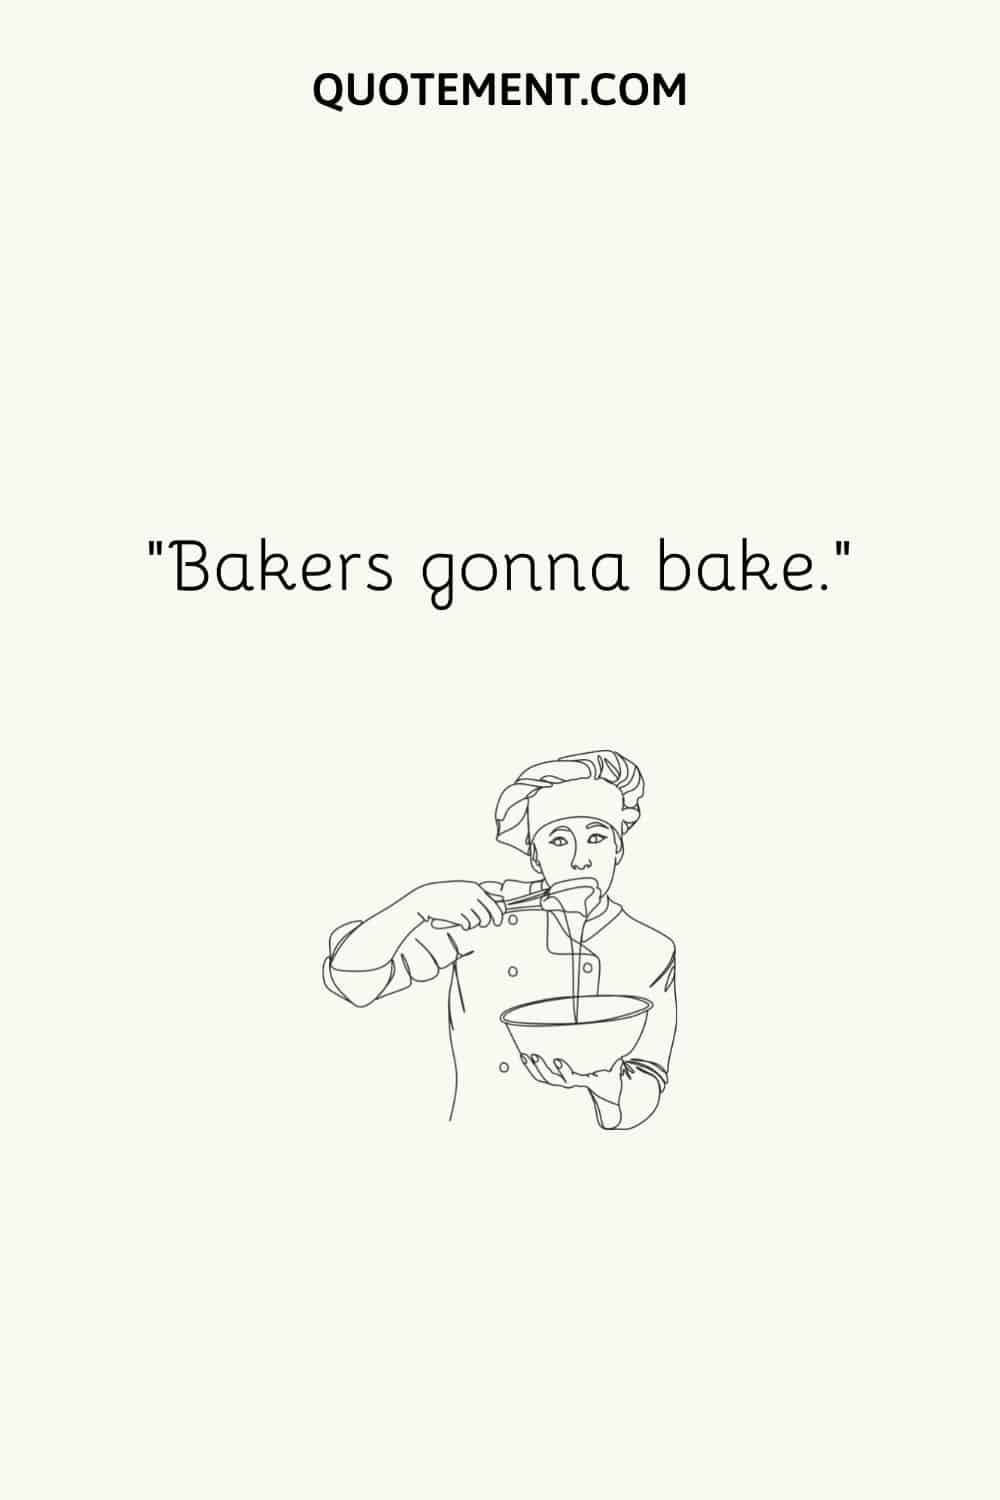 Bakers gonna bake.